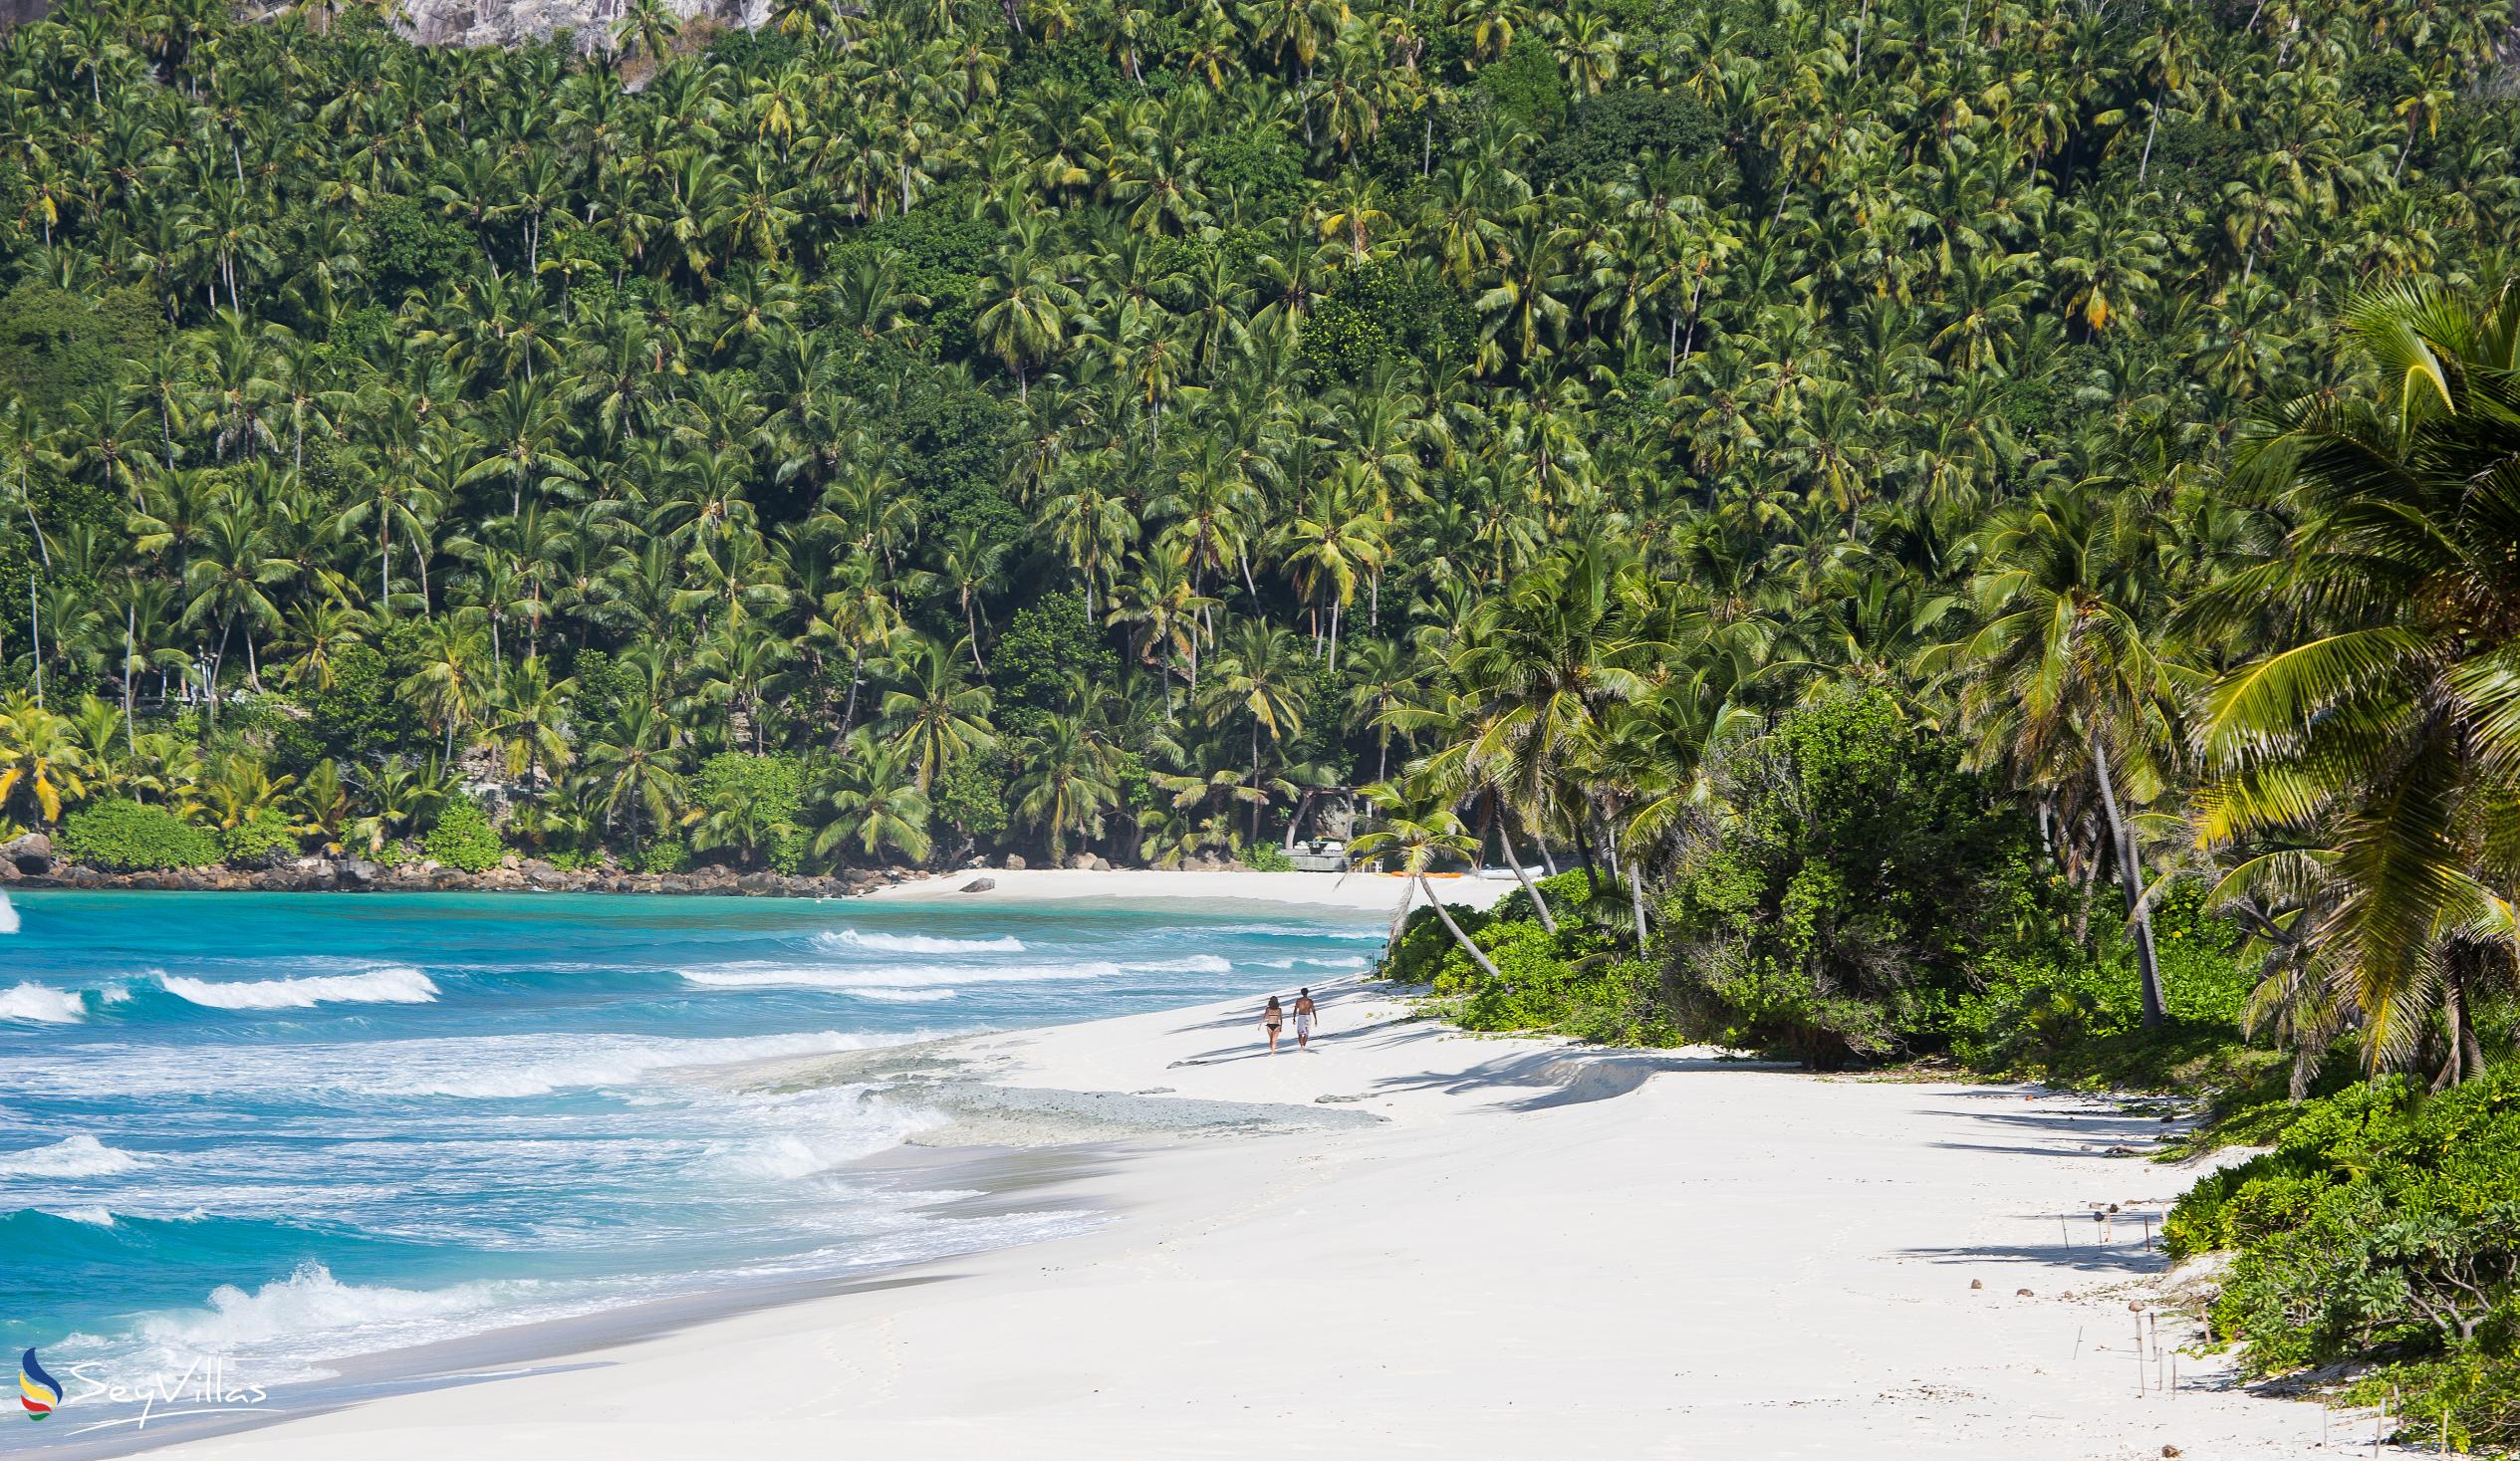 Photo 2: West Beach - North Island - Other islands (Seychelles)